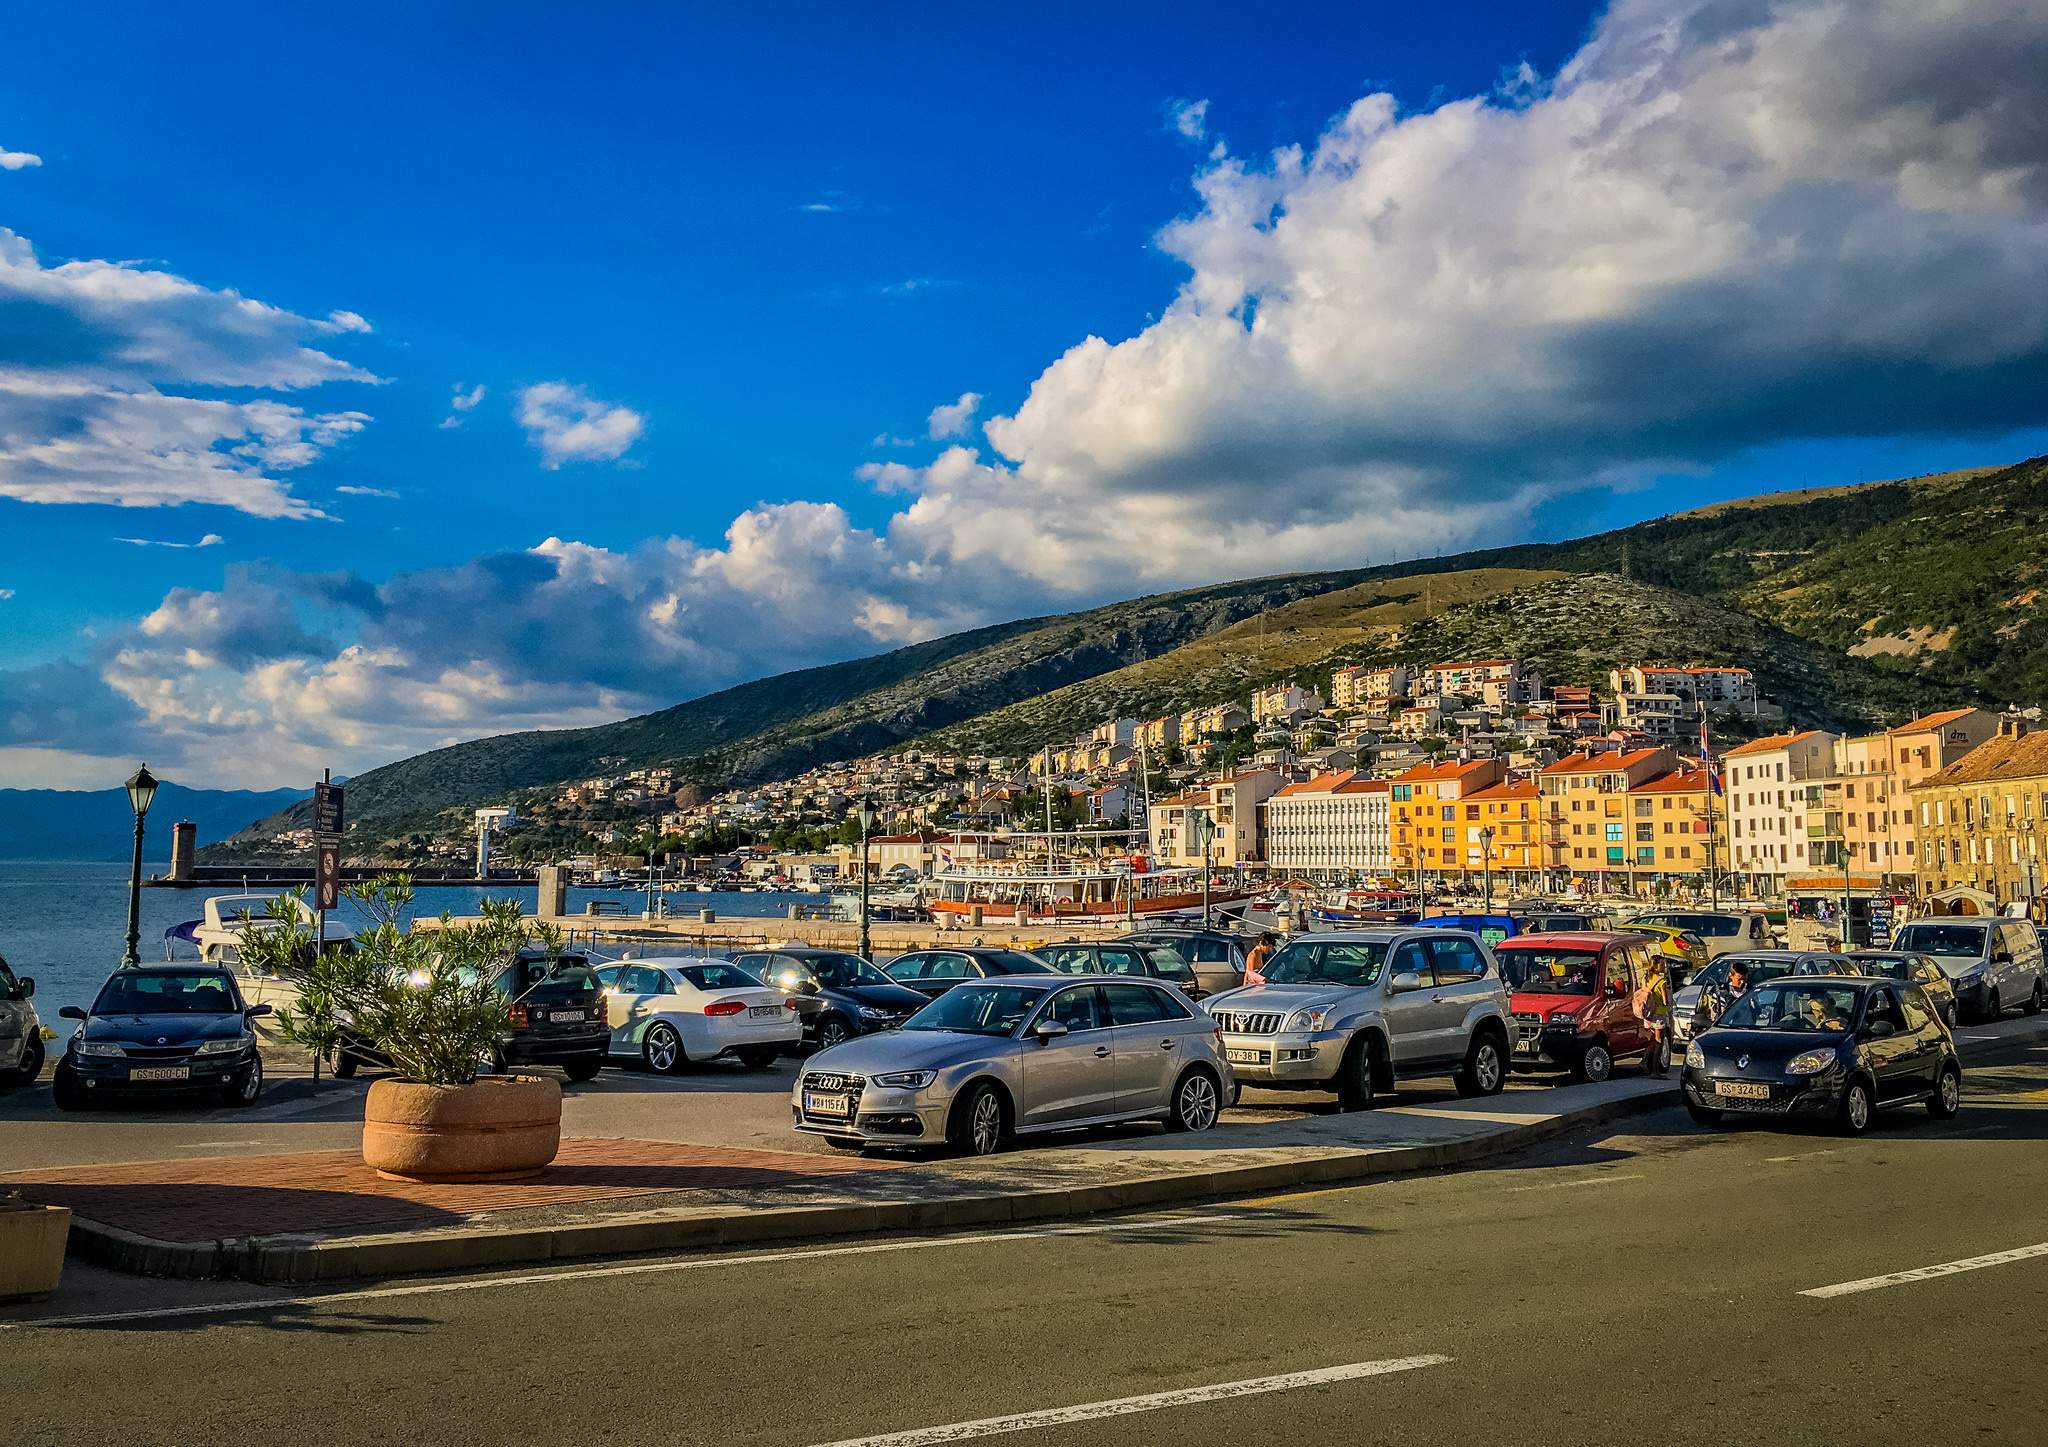 View from the promenade in Senj, Croatia